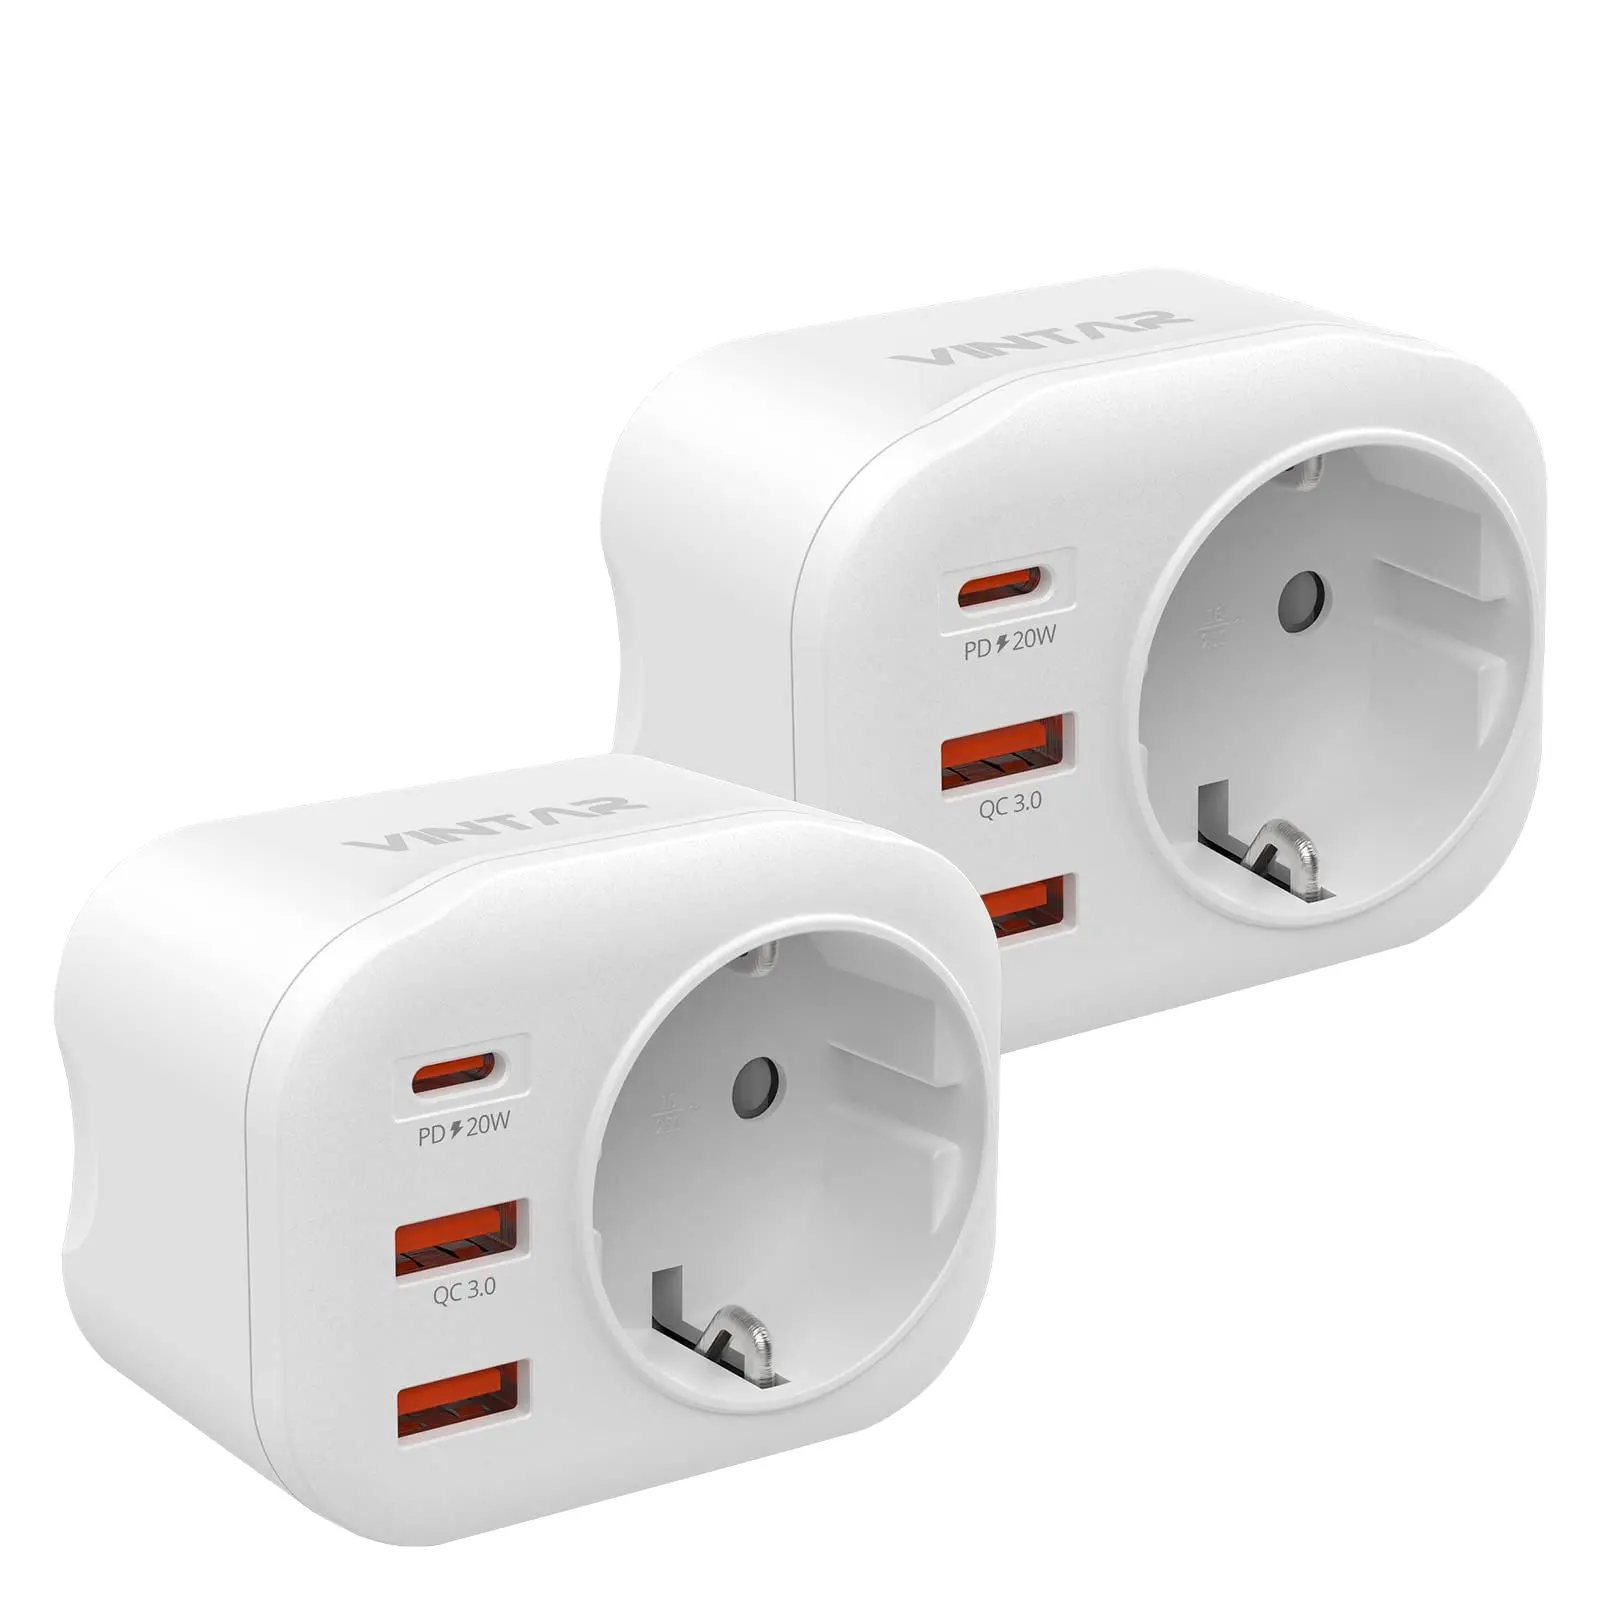 VINTAR adaptor perjalanan colokan listrik USB Travel Adapter Outlet dinding standar EU